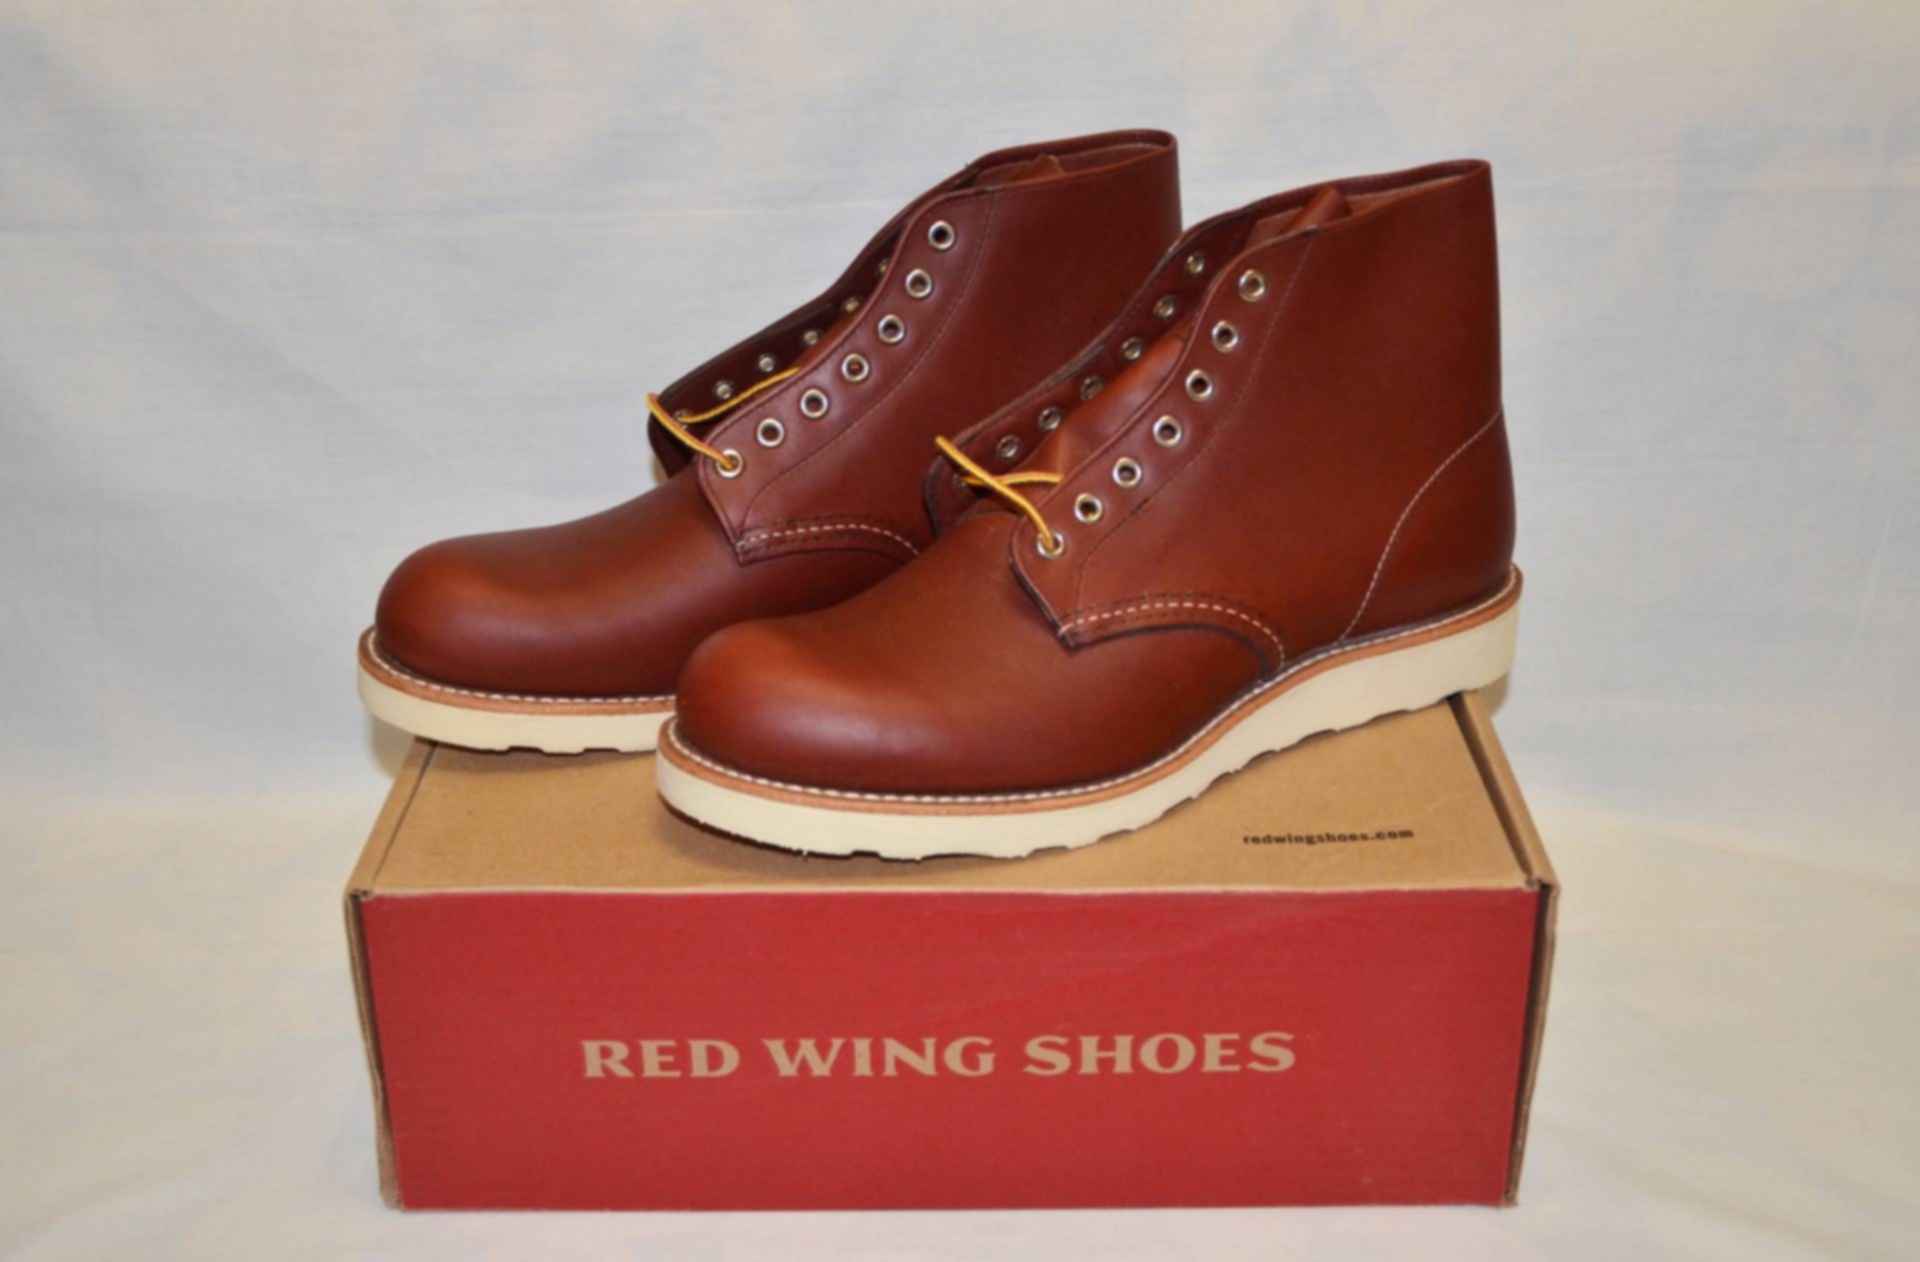 Культовые рабочие ботинки Classic Round от бренда Red Wing. 